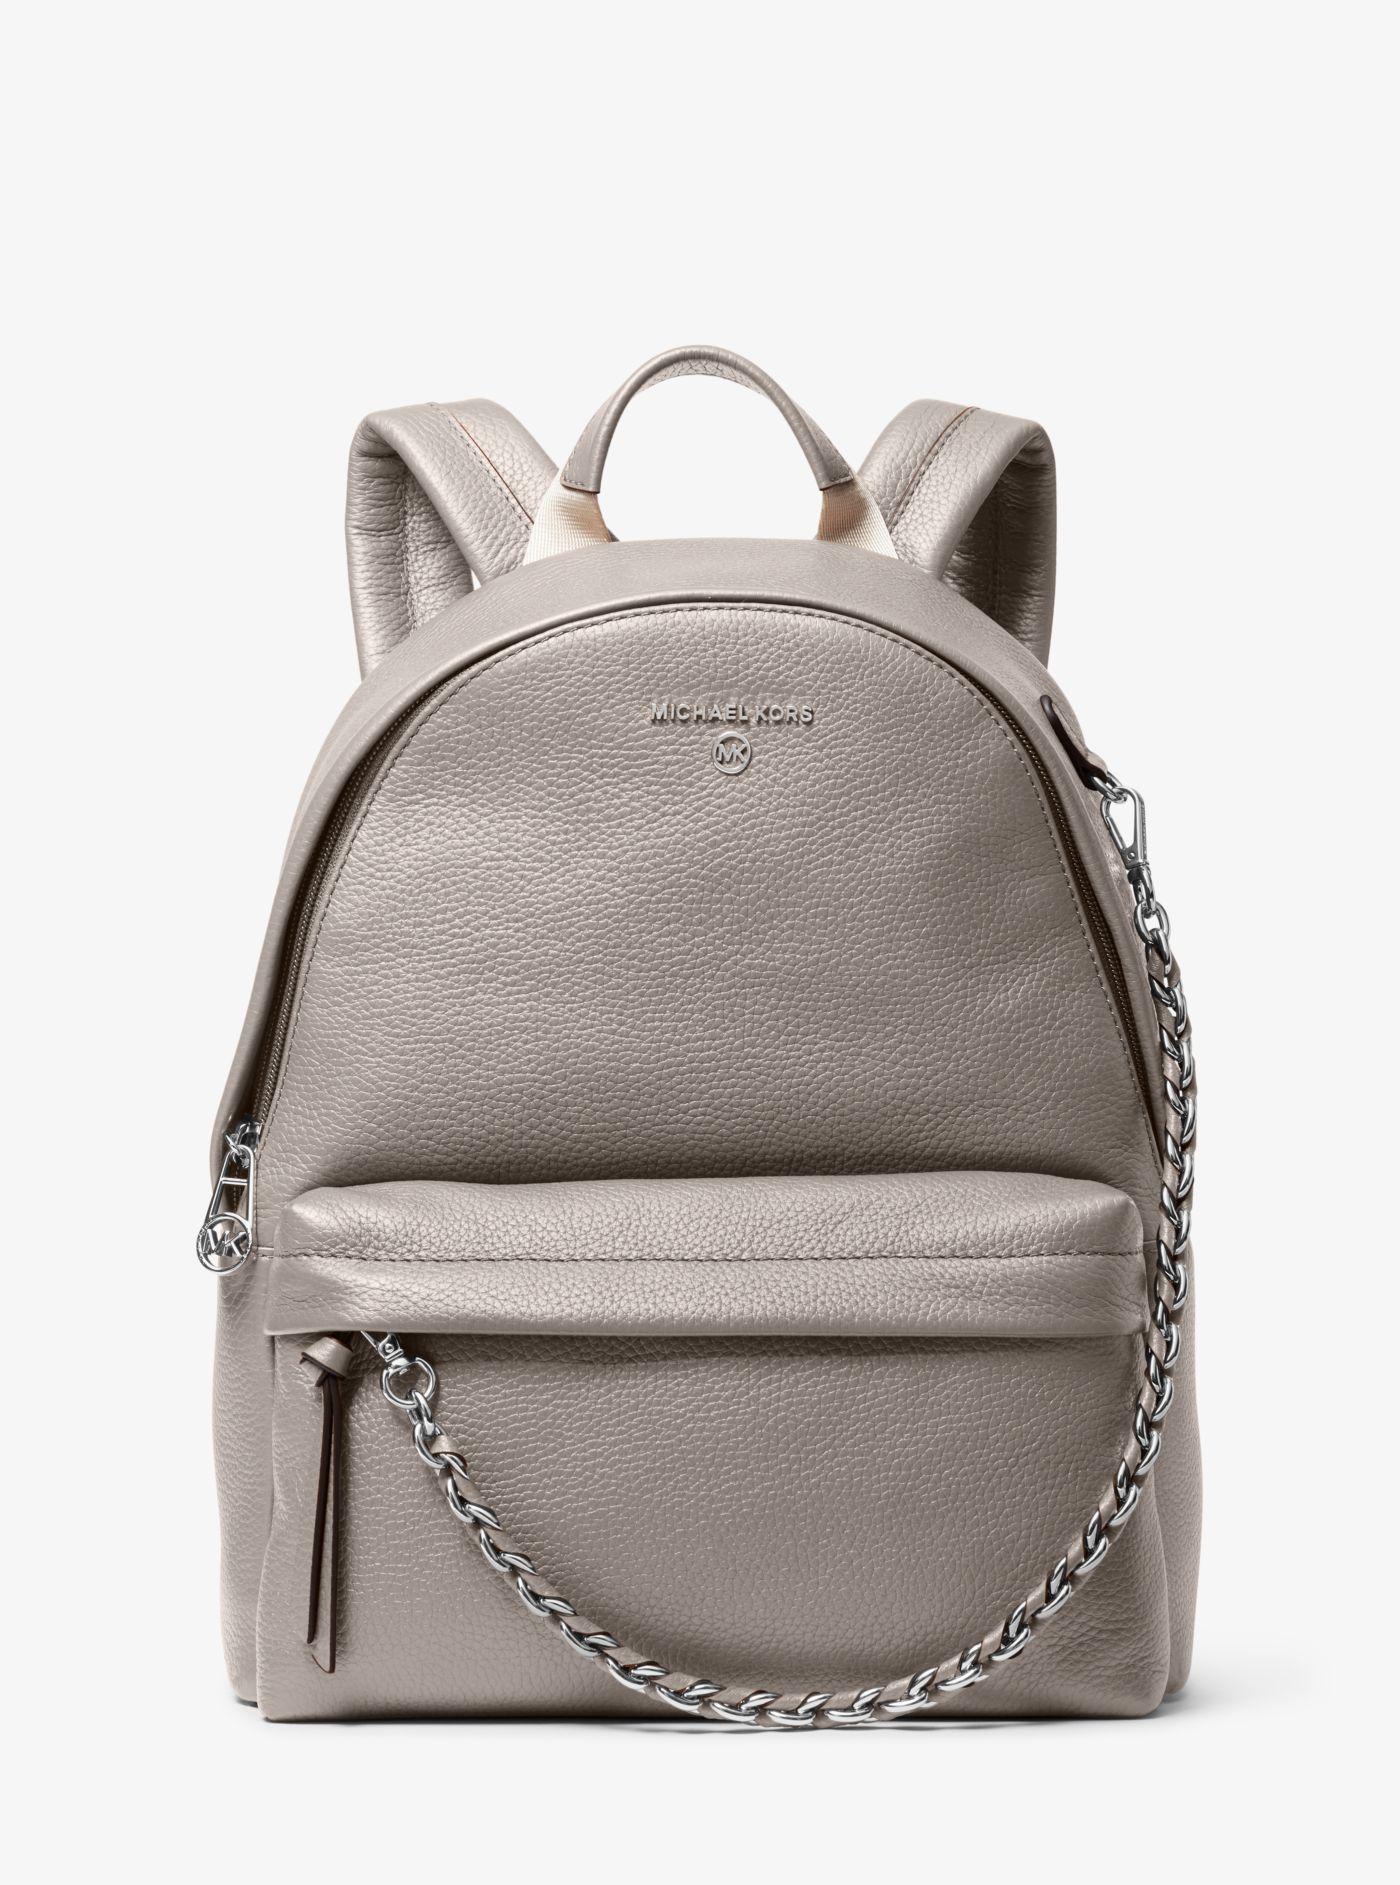 Michael Kors Slater Medium Pebbled Leather Backpack in Pearl Grey (Gray ...